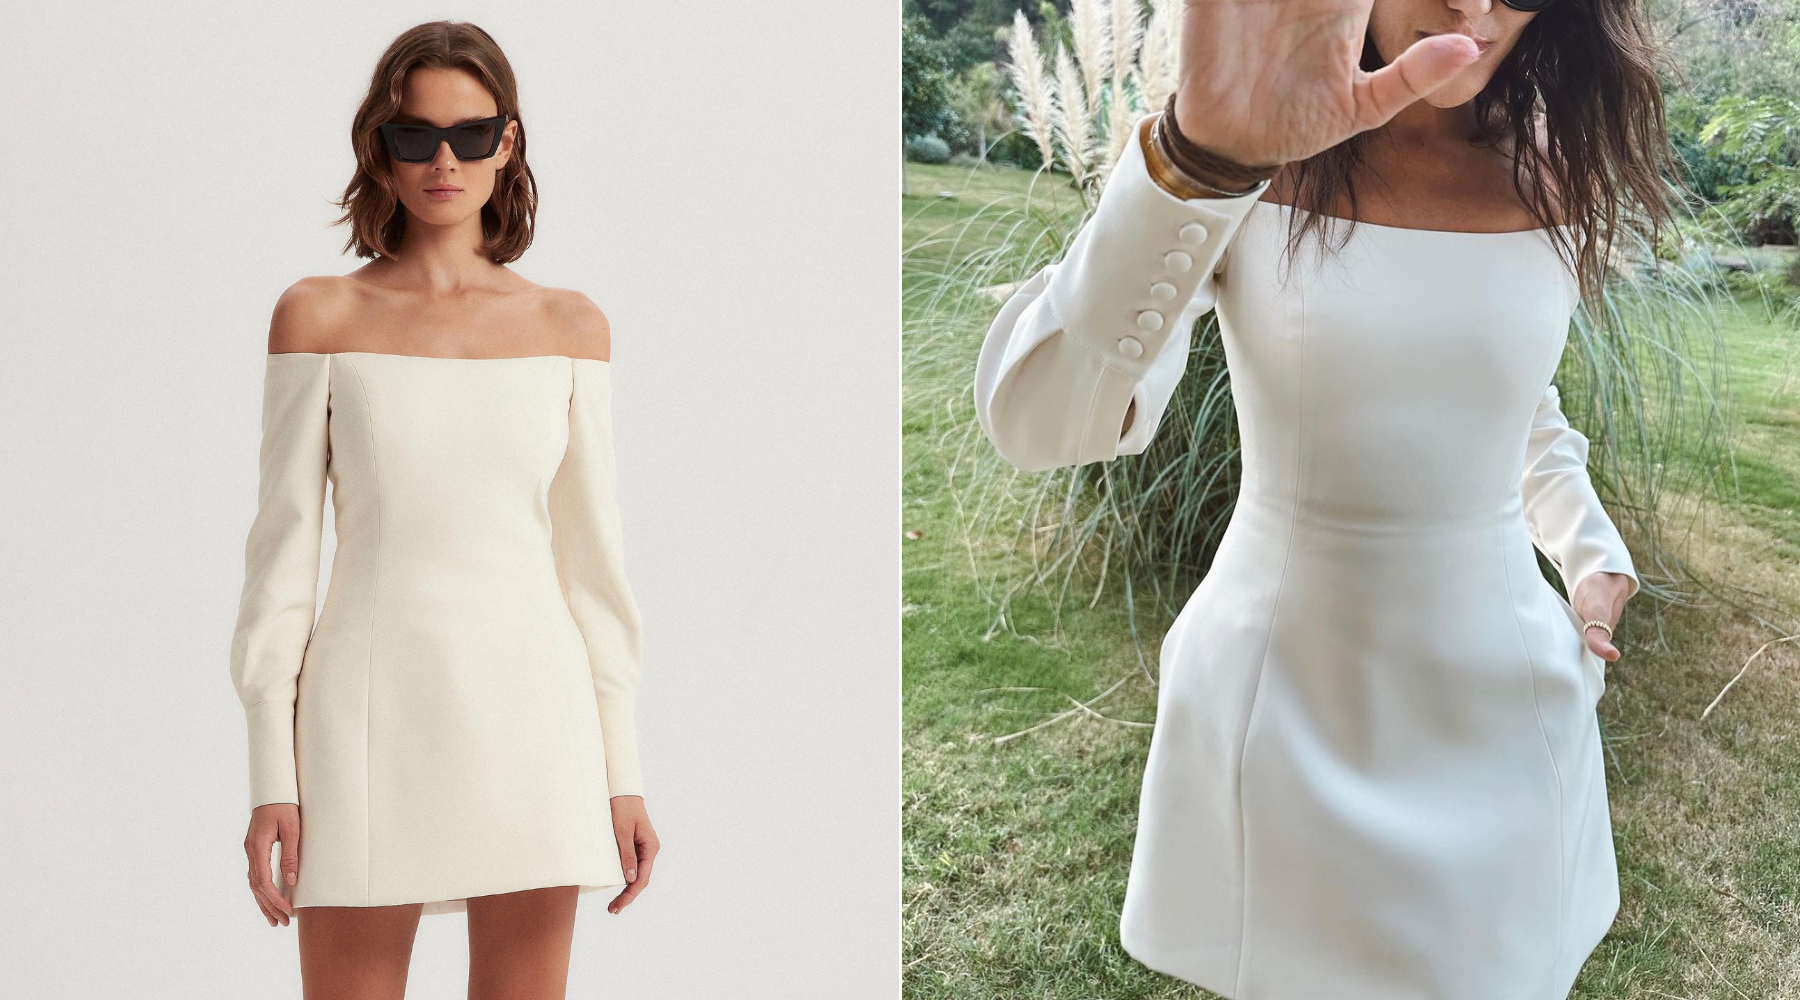 Little White Dress: Omiljena haljina Kelly Rutherford dostupna je i kod nas